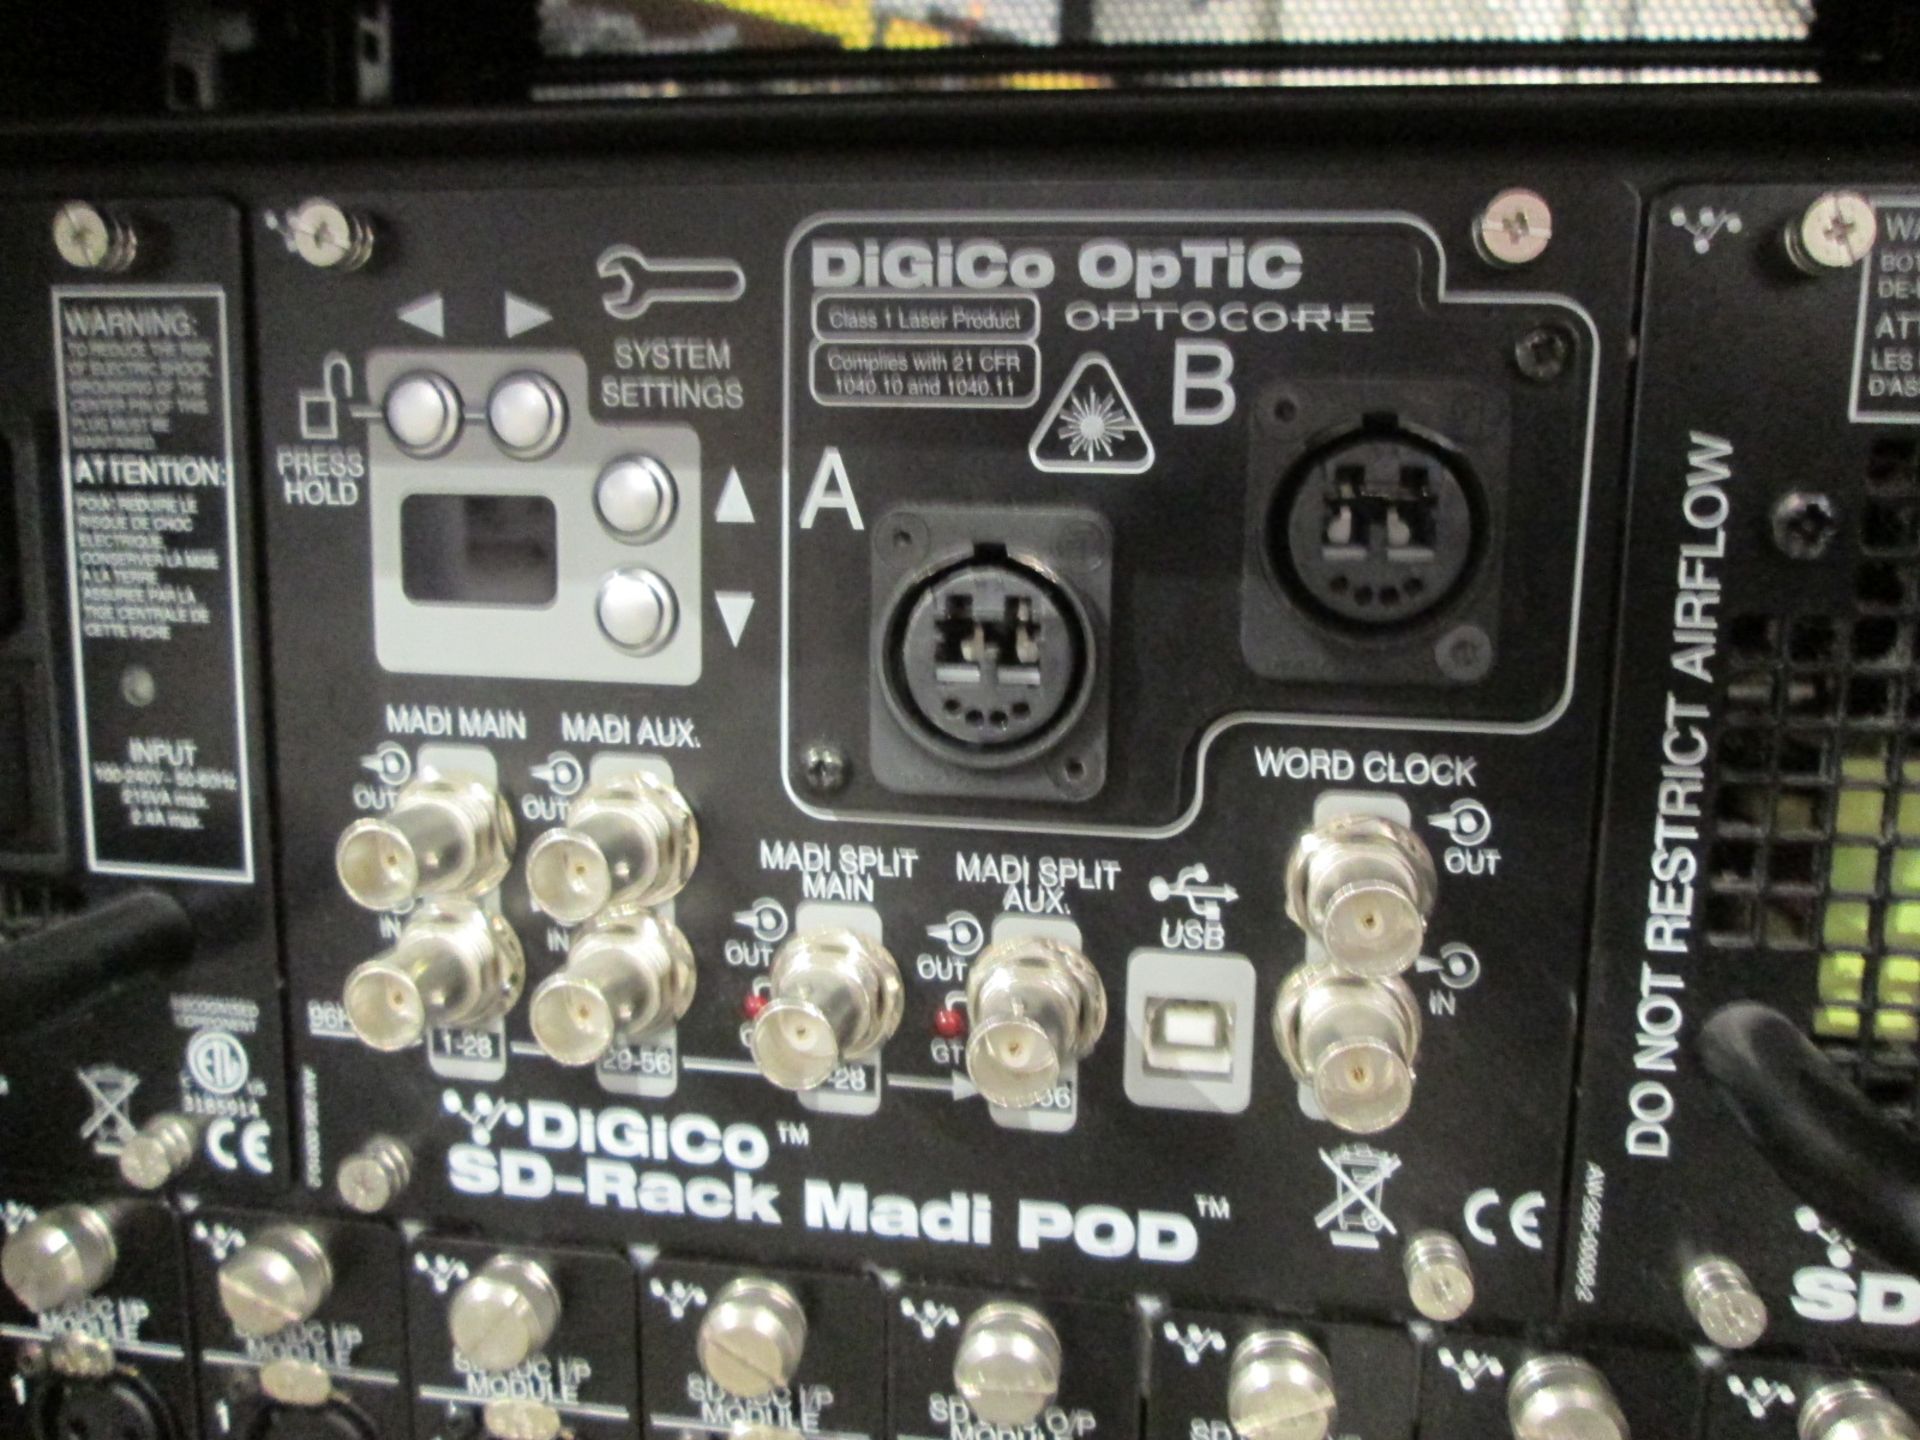 DigiCo 192 kHz SD-Rack Digital Input / Output Frame. S/N 771836 1506 - Image 6 of 8